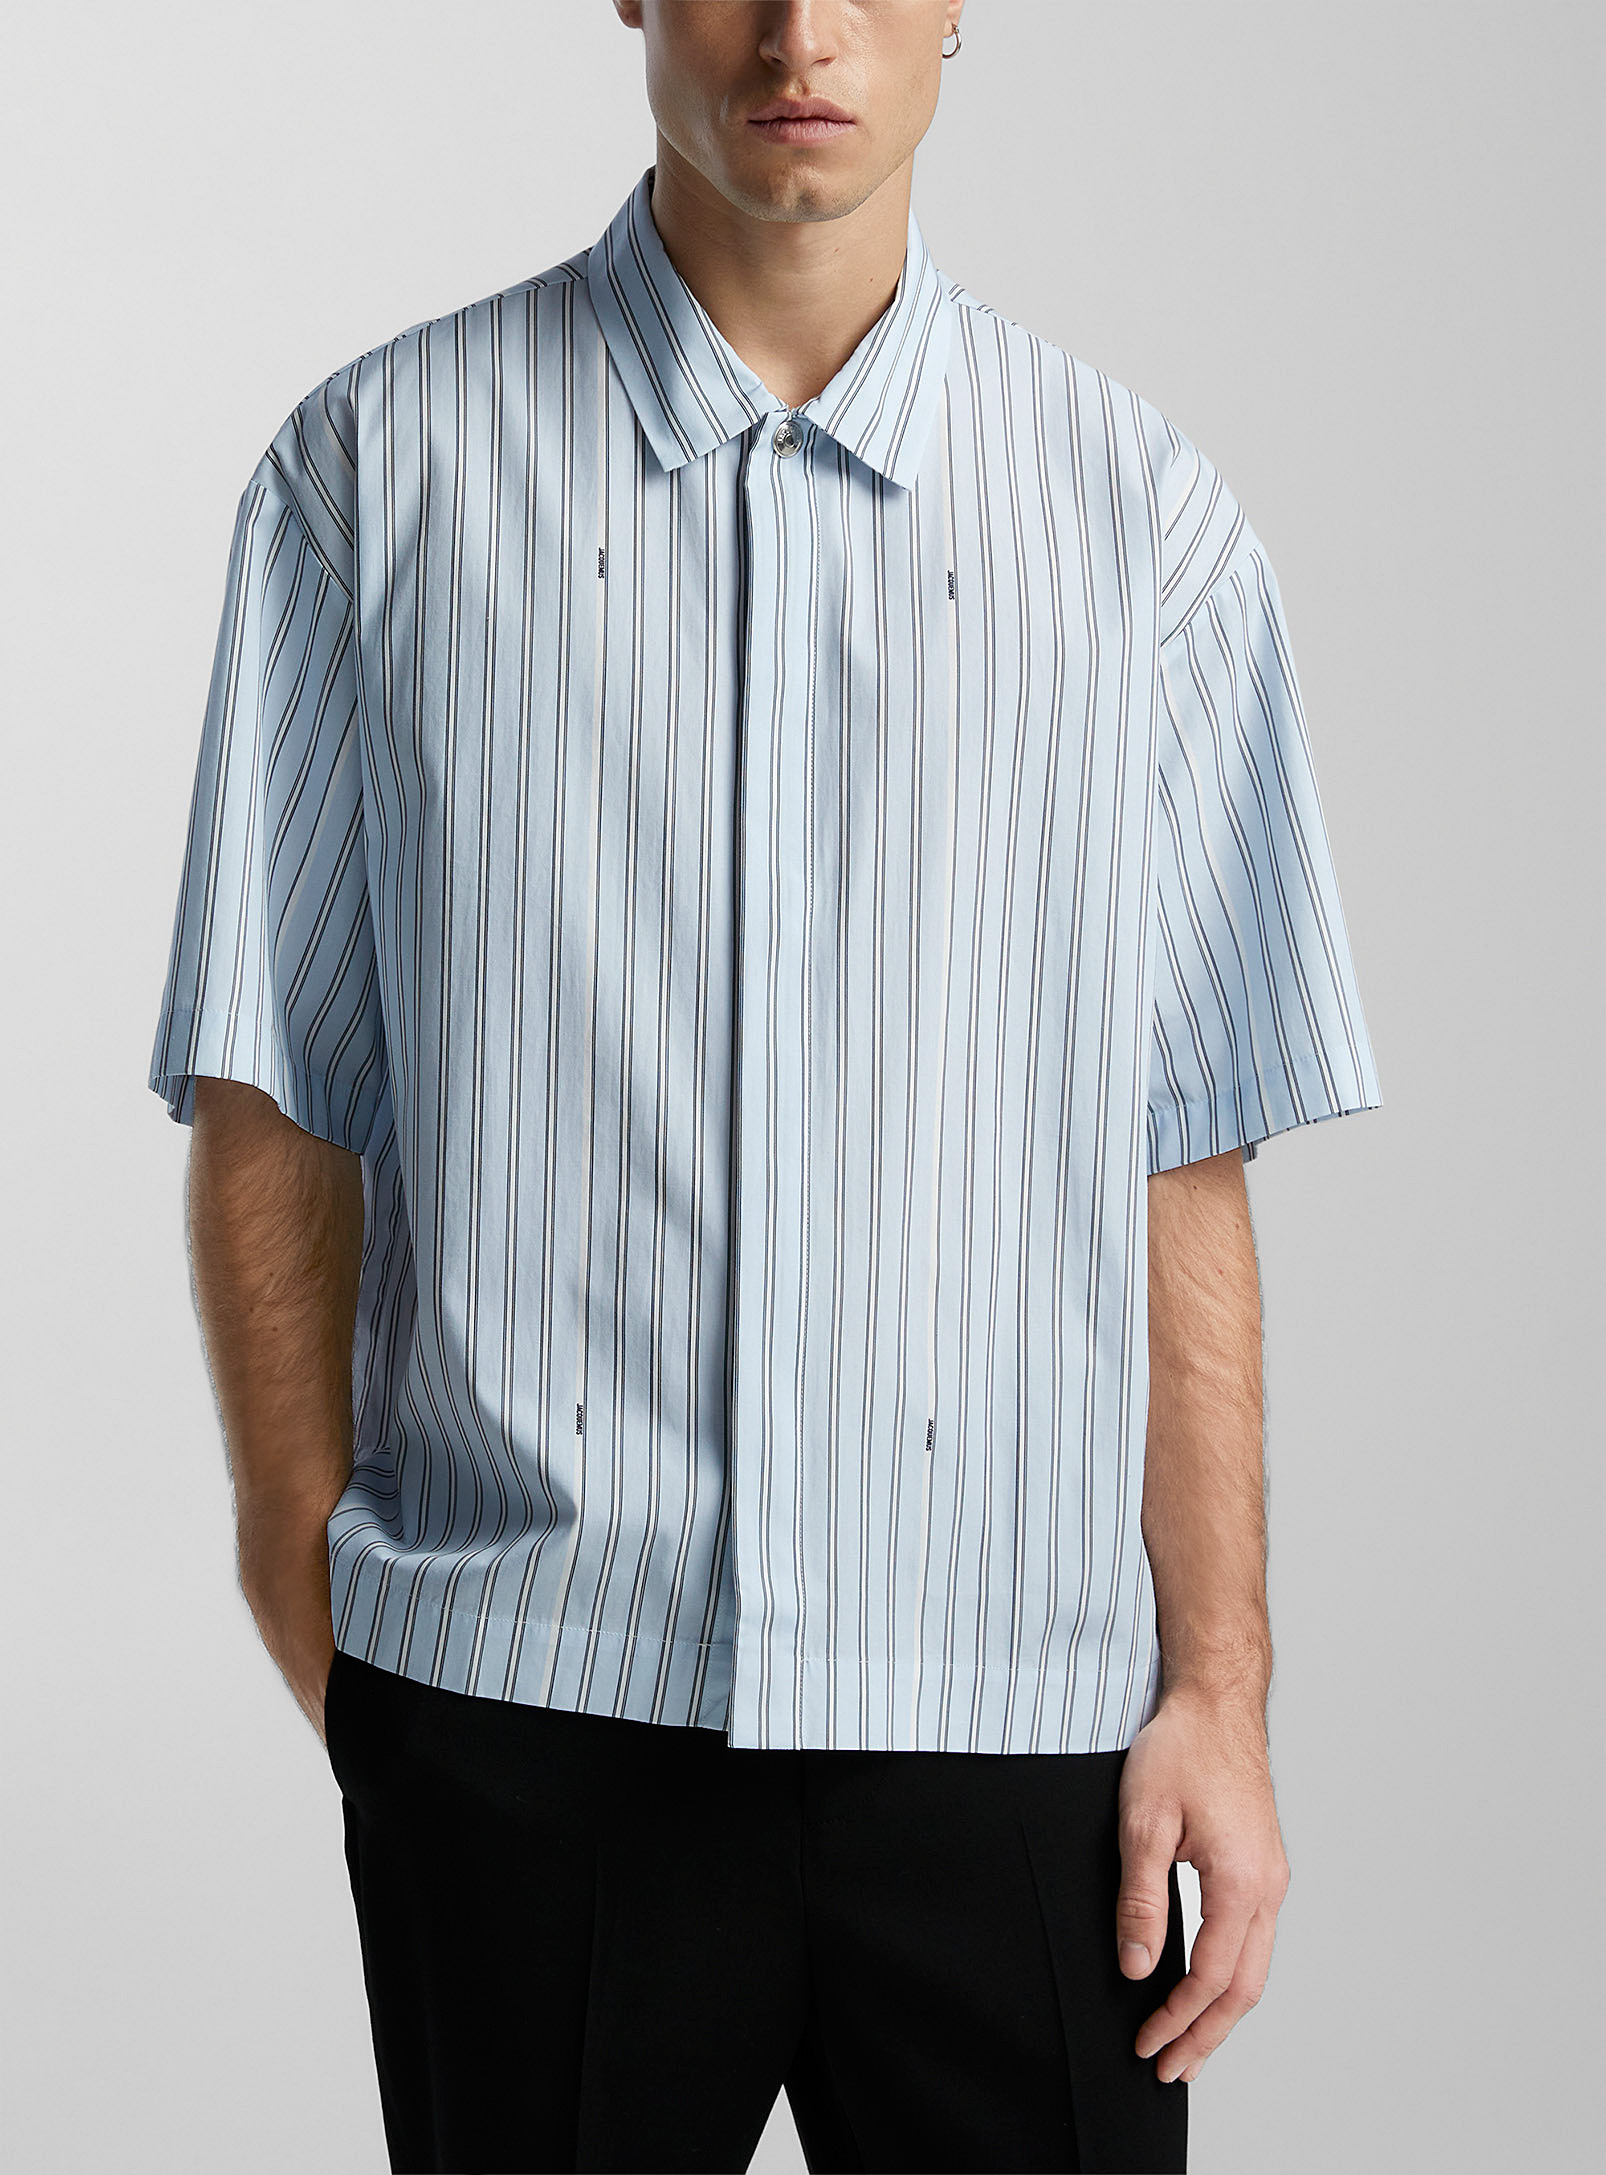 Jacquemus - La chemise manches courtes rayures signature